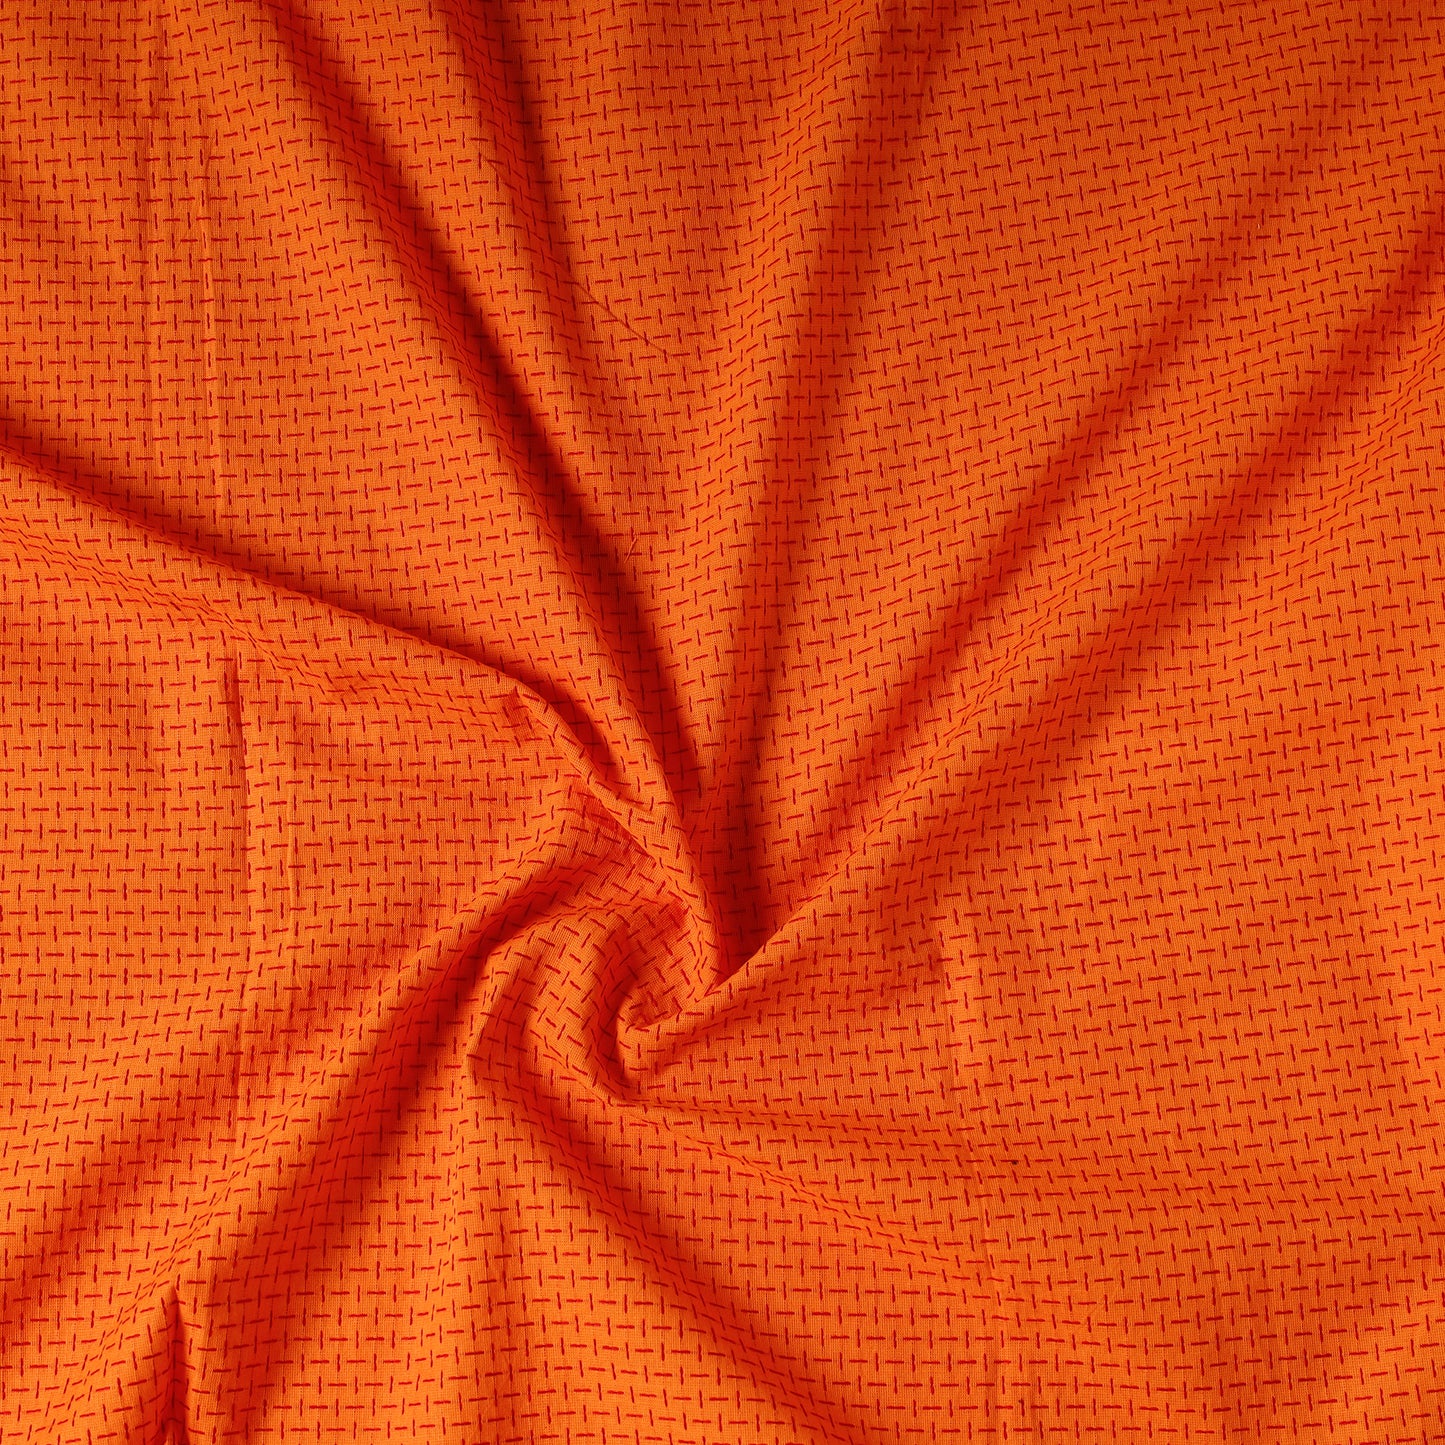 Orange - Jacquard Prewashed Cotton Precut Fabric (1.1 meter) 15